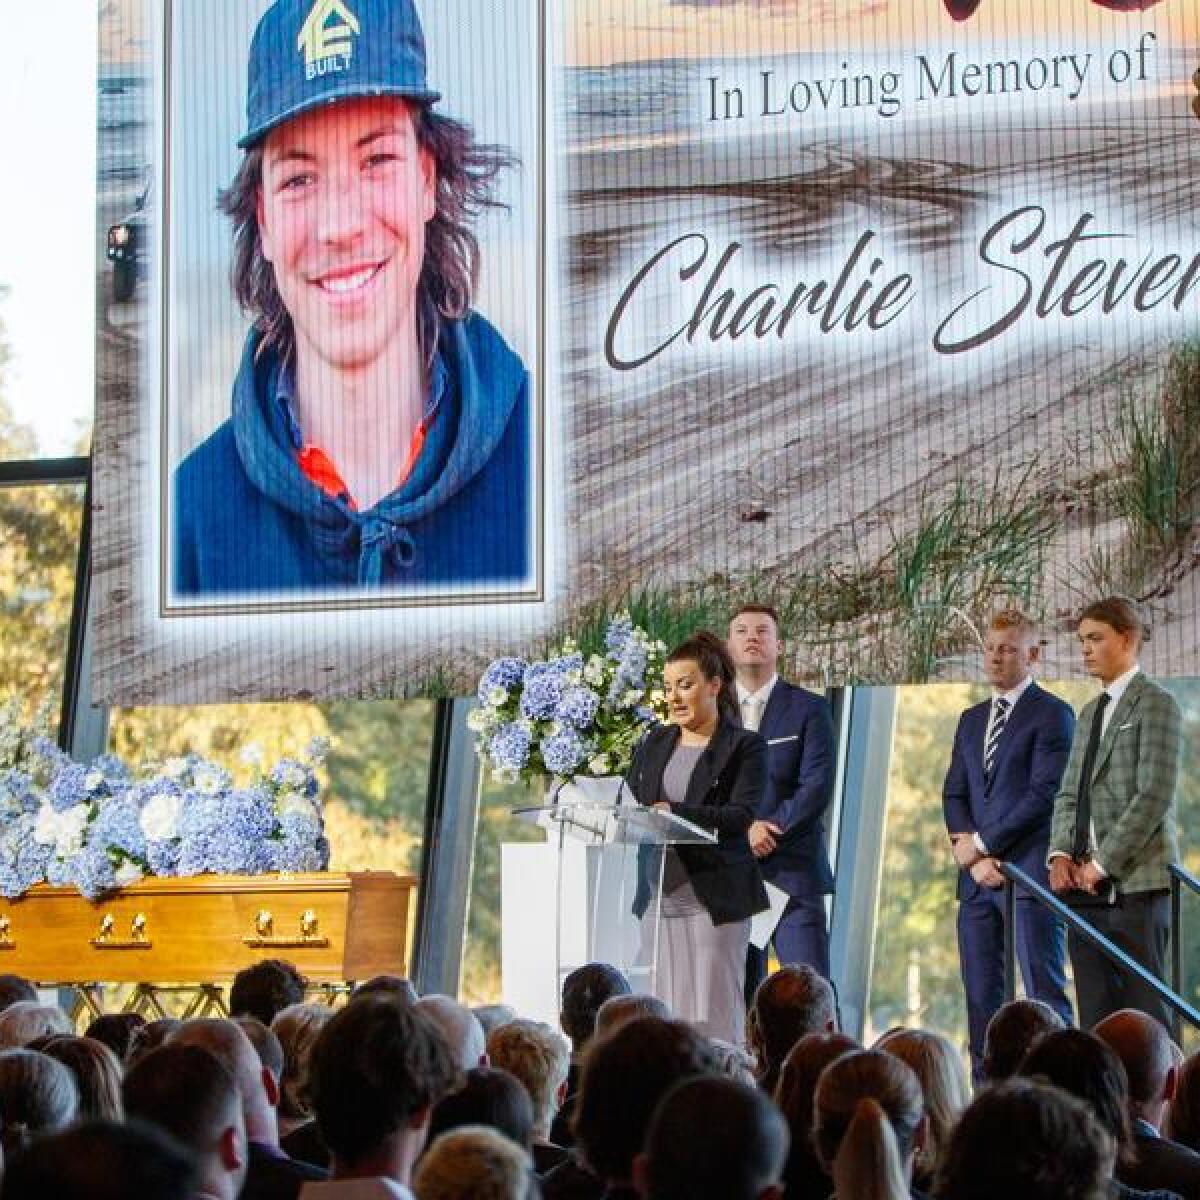 The siblings of Charlie Stevens at his memorial service